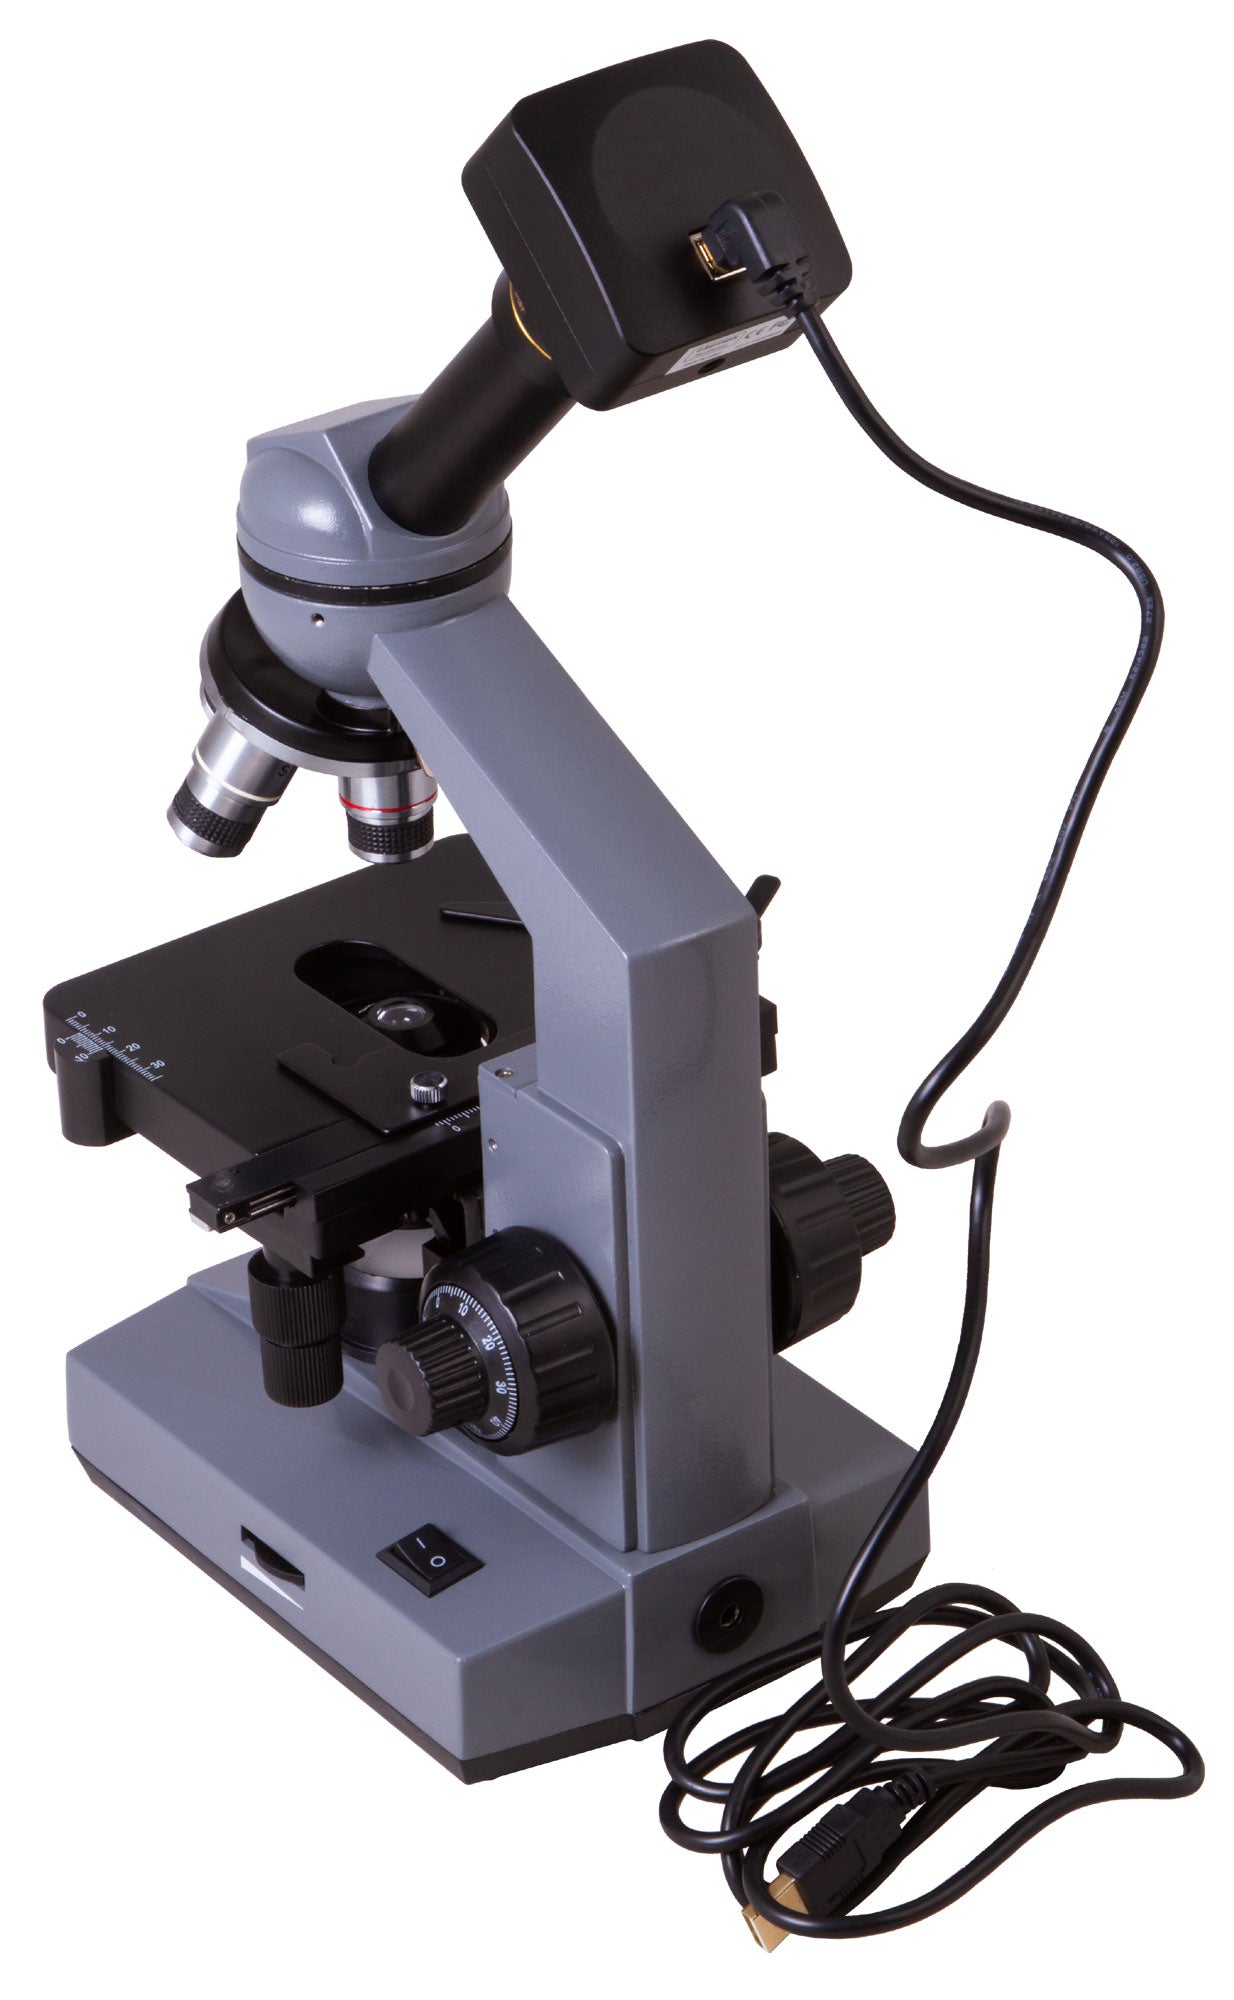 Levenhuk D320L PLUS 3.1M Digital Monocular Microscope